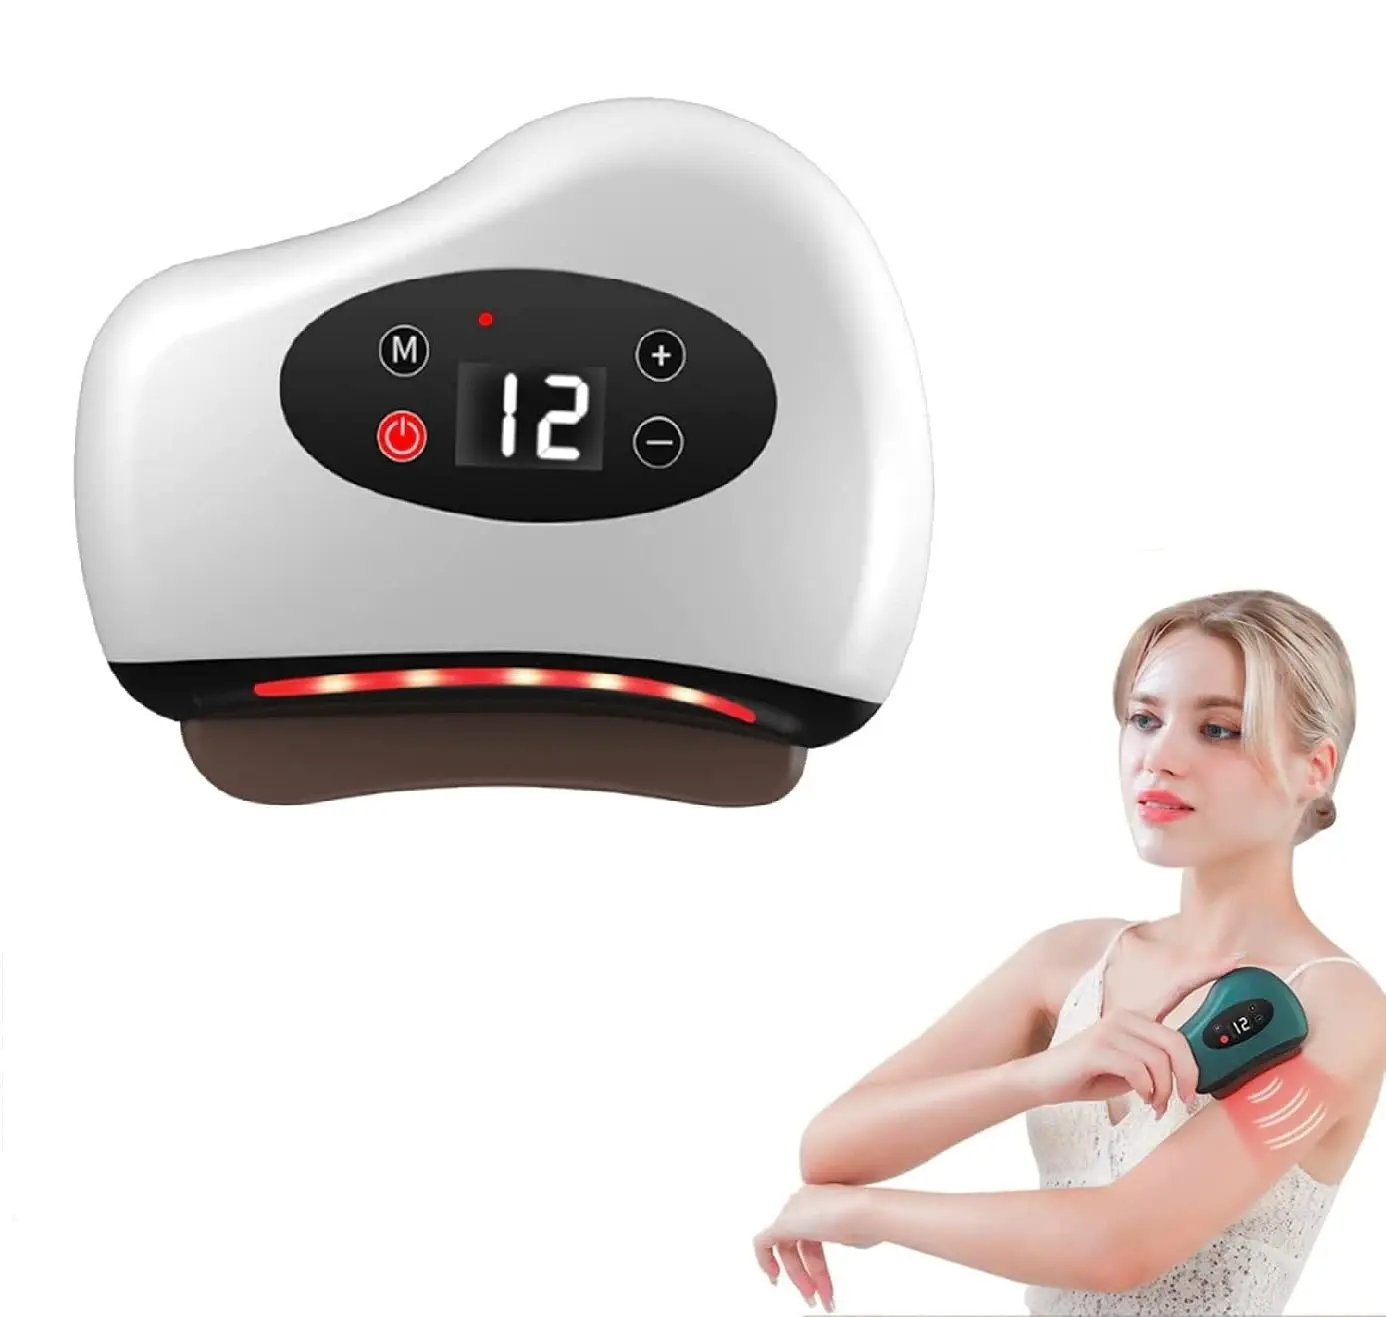 12 Gänge Elektro kratz brett Hot Com press Hochfrequenz Vibration Facial Lifting Entspannung Guasha Massage gerät